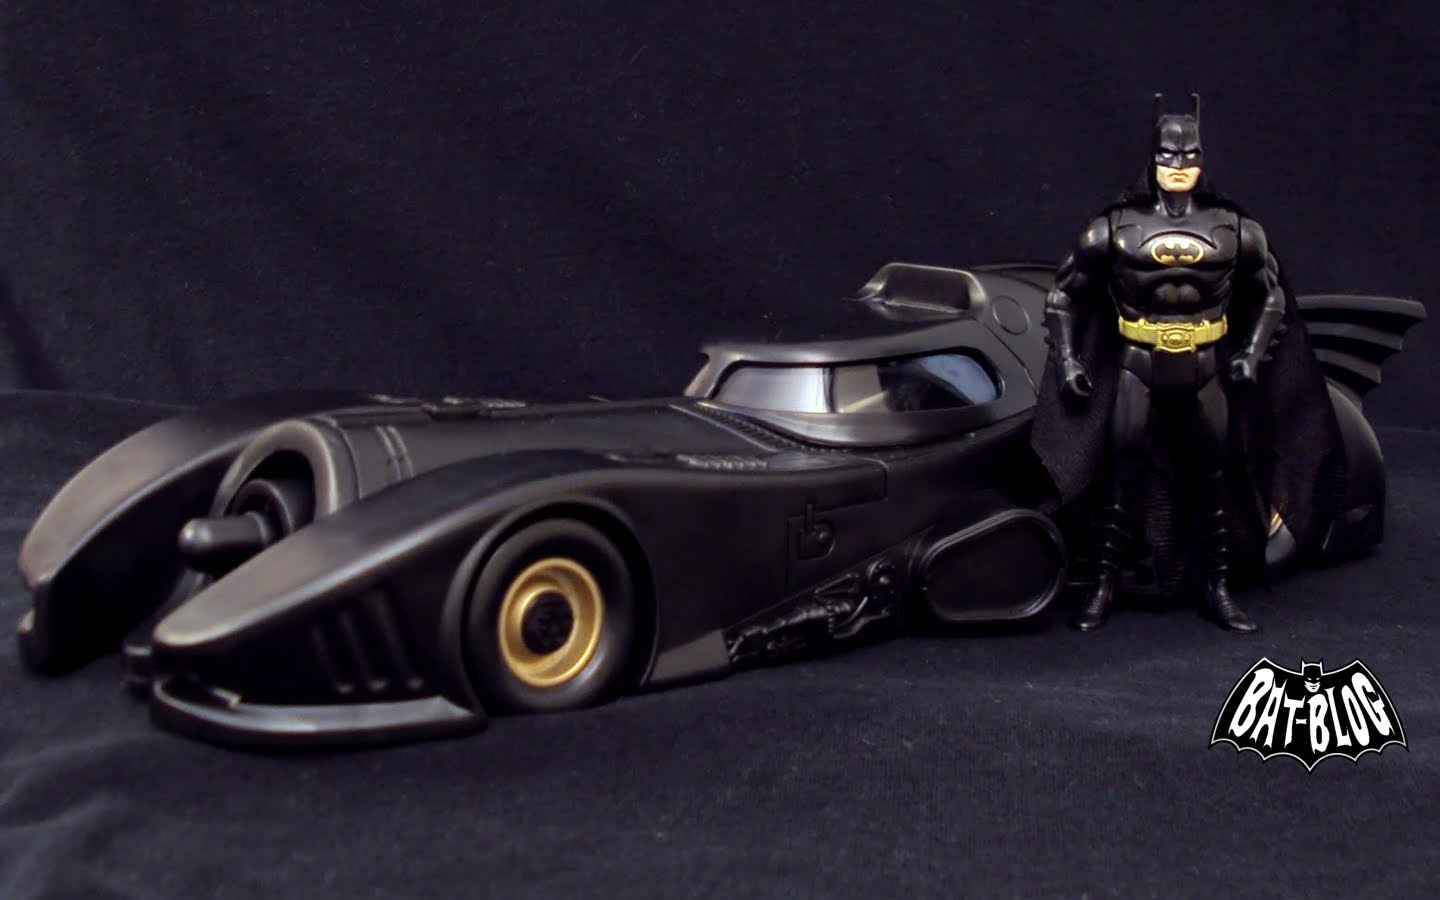 Bat Batman Toys And Collectibles